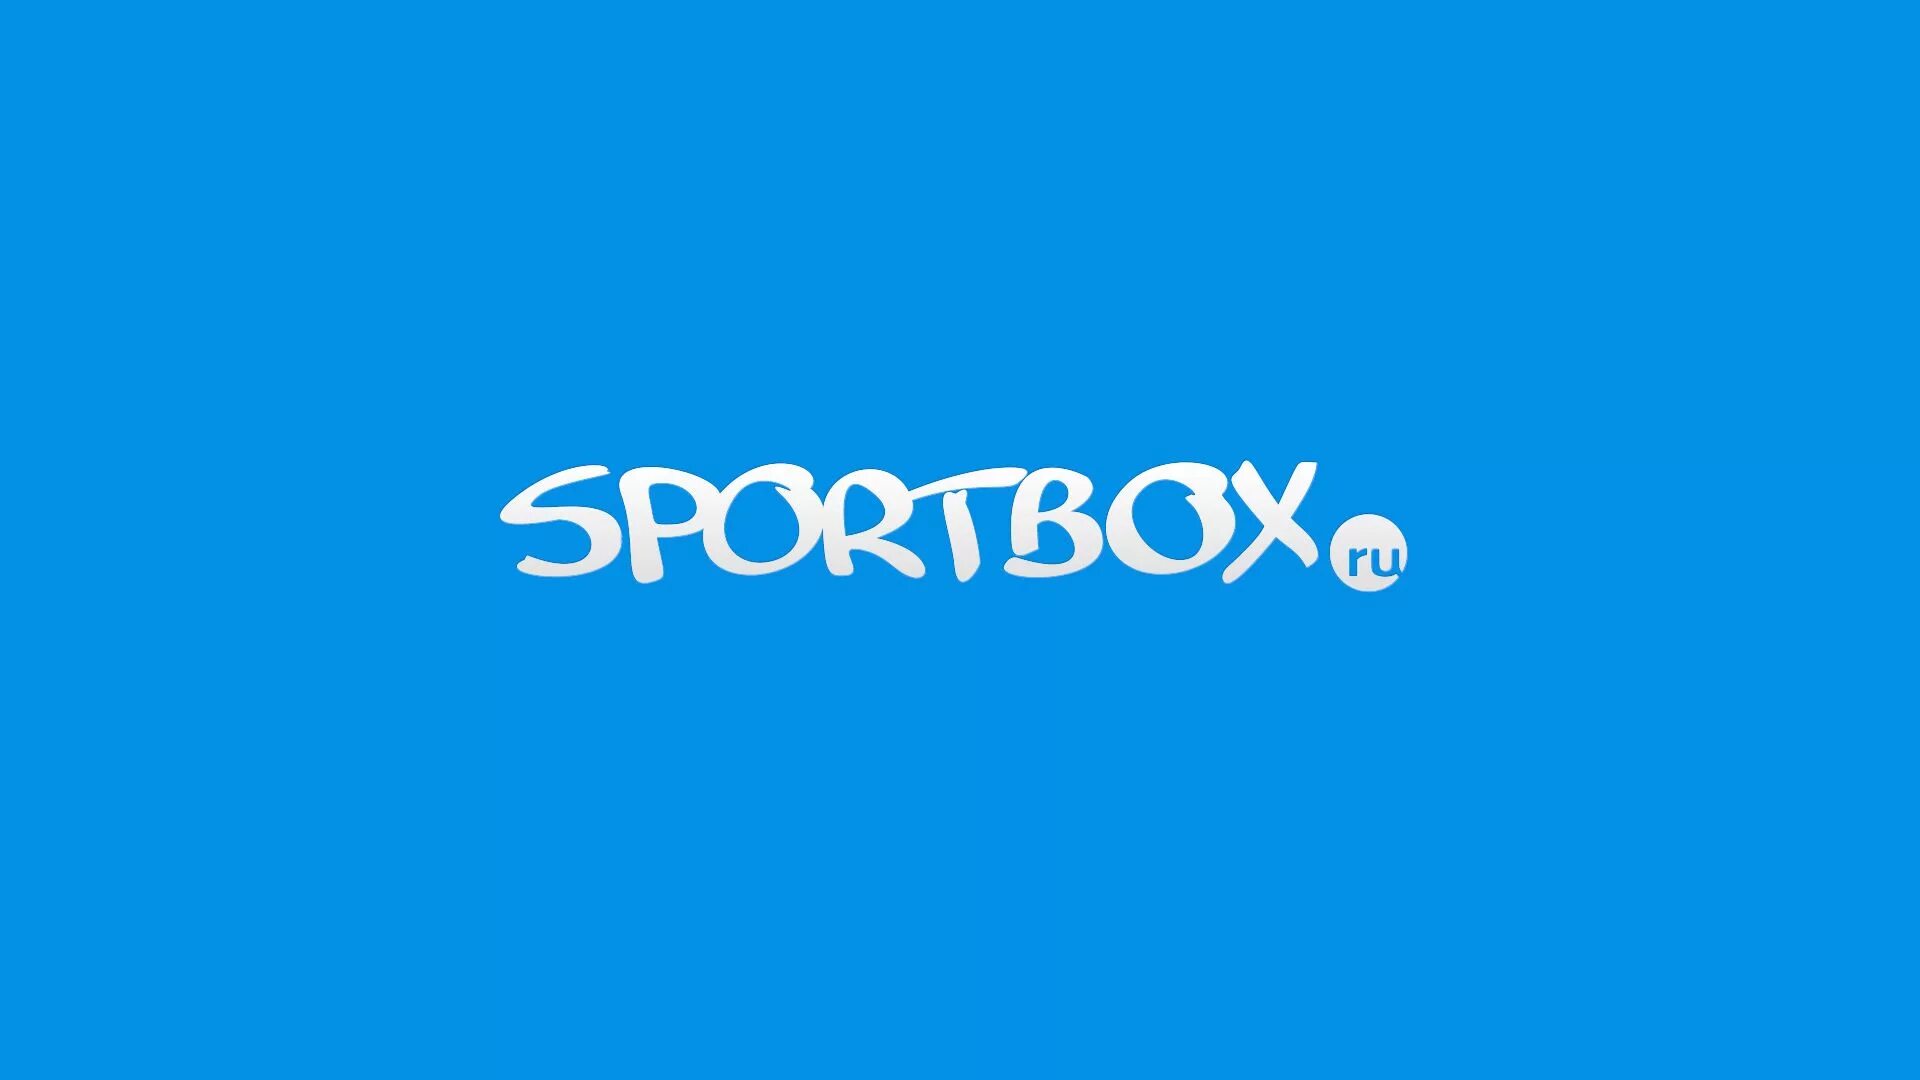 Sportbox ru результаты спорта. Спортбокс. Спортбокс лого. Спортмикс. Sportbox.ru.